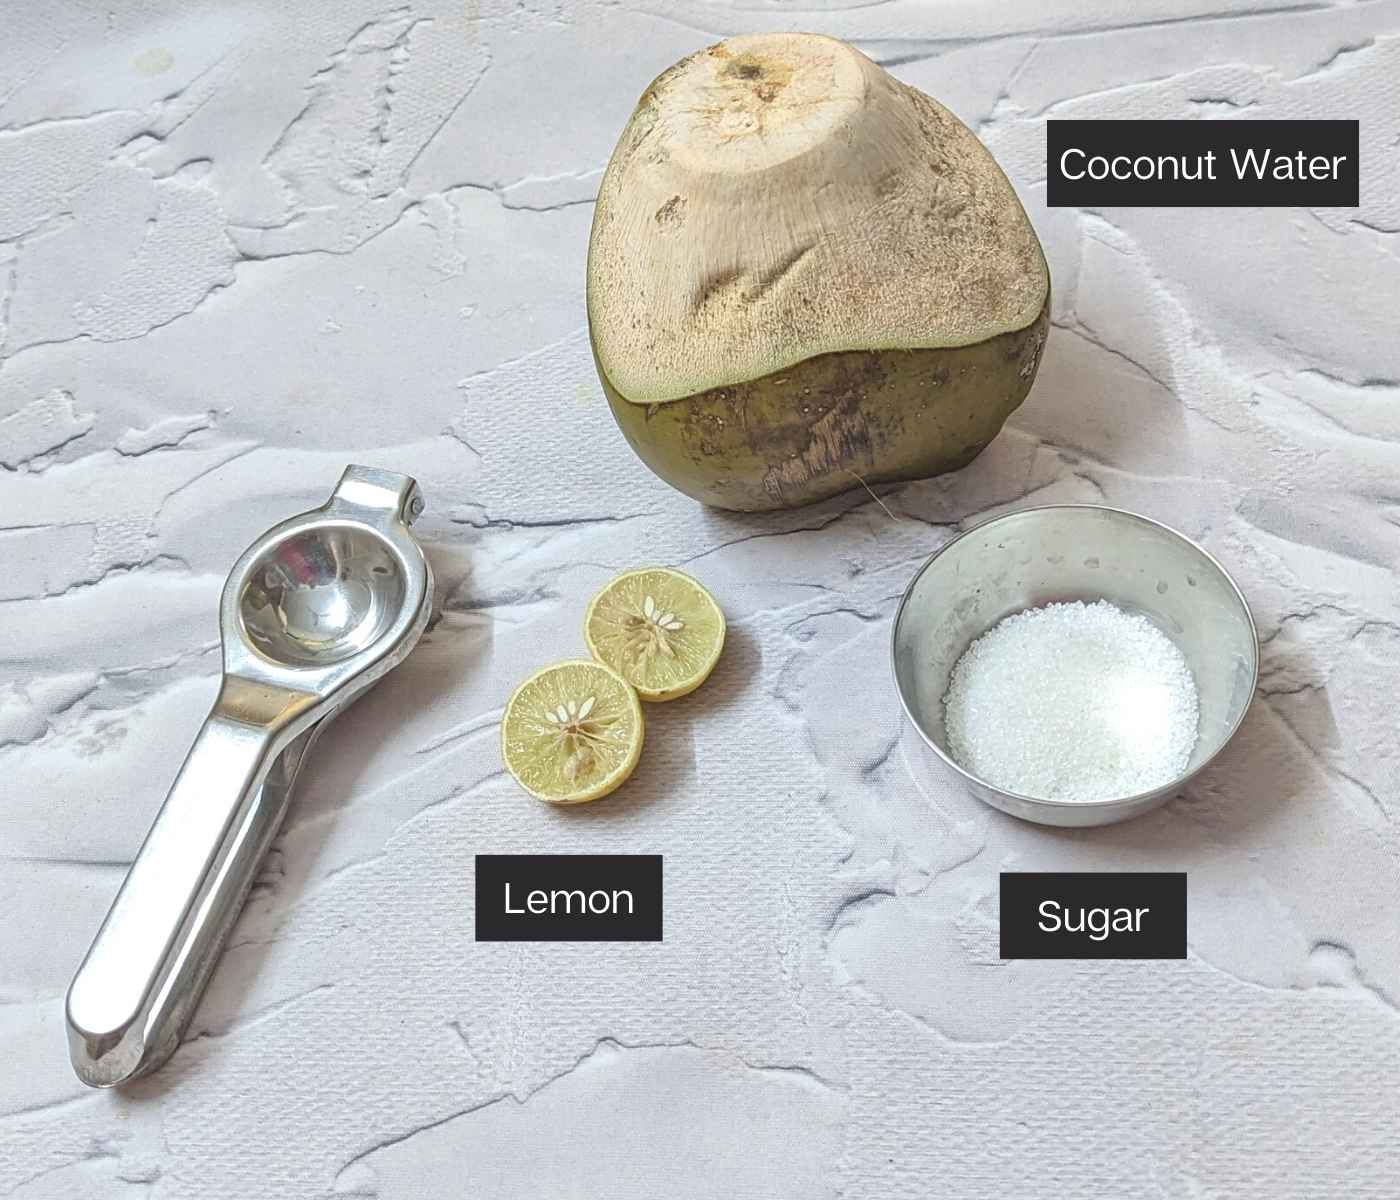 Tender coconut, lemon and sugar on a frame.